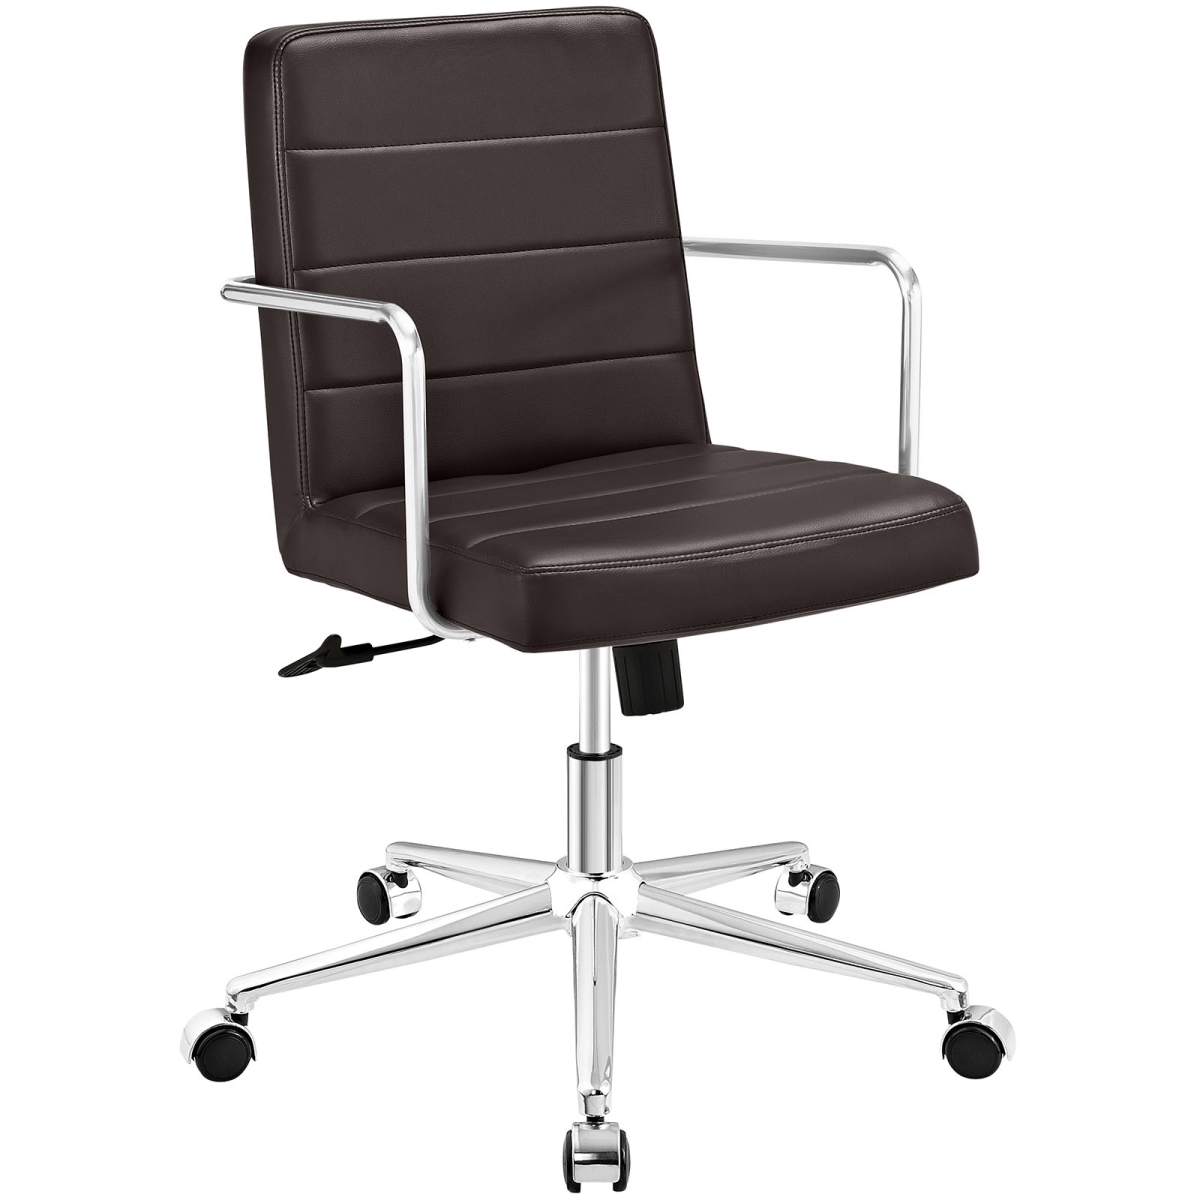 Modway Eei-2125-brn Cavalier Mid Back Office Chair, Brown